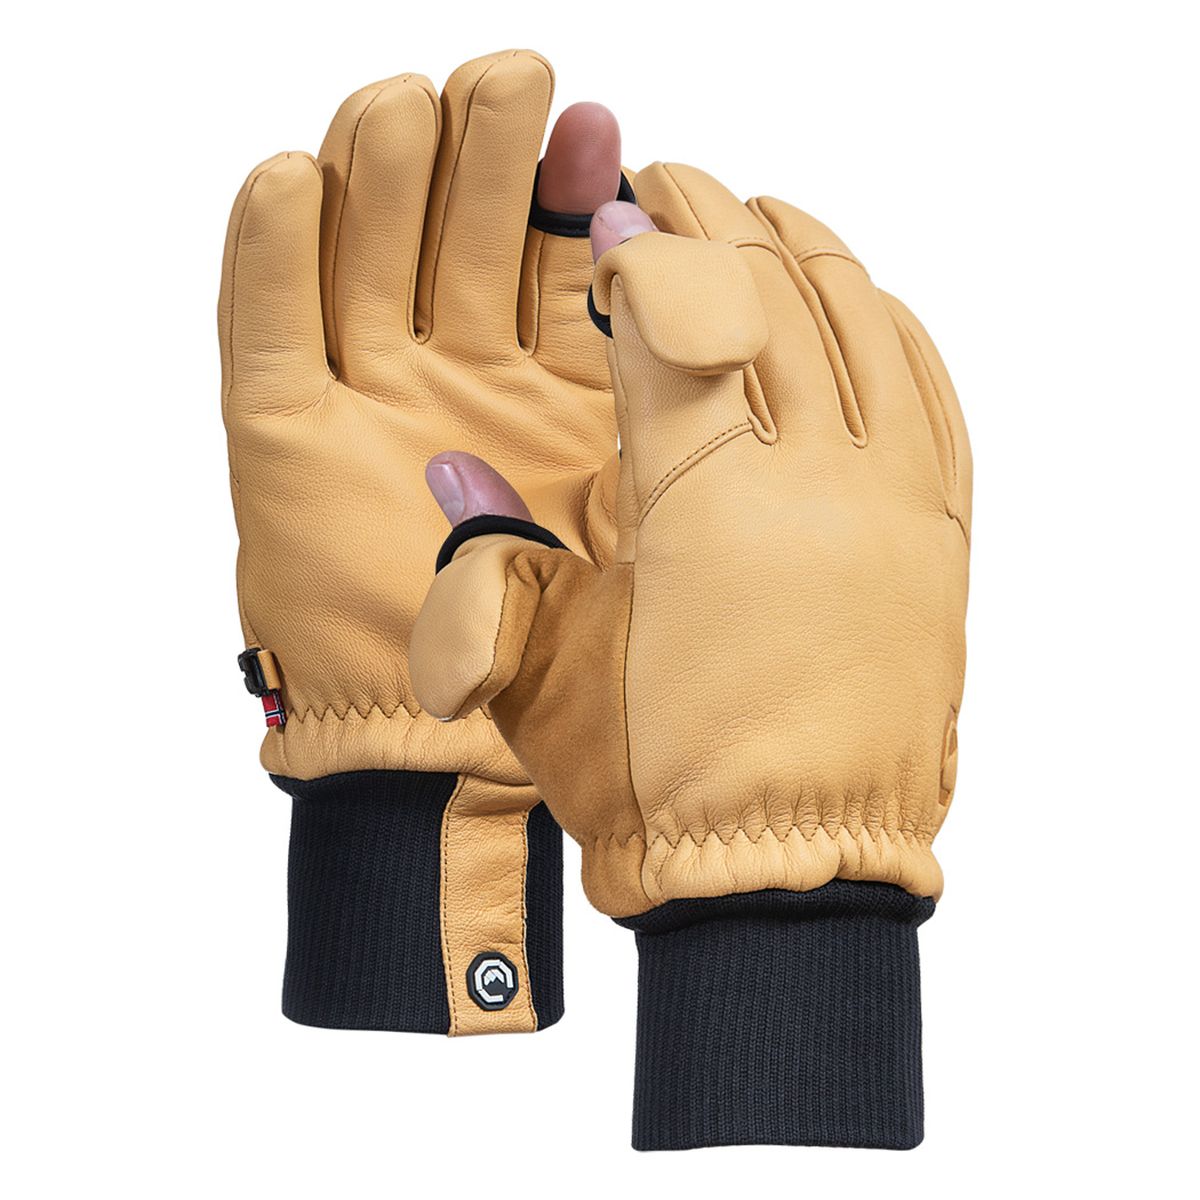 Vallerret Hatchet Leather Glove Natural, Leder-Fotohandschuhe XL - Hellbraun